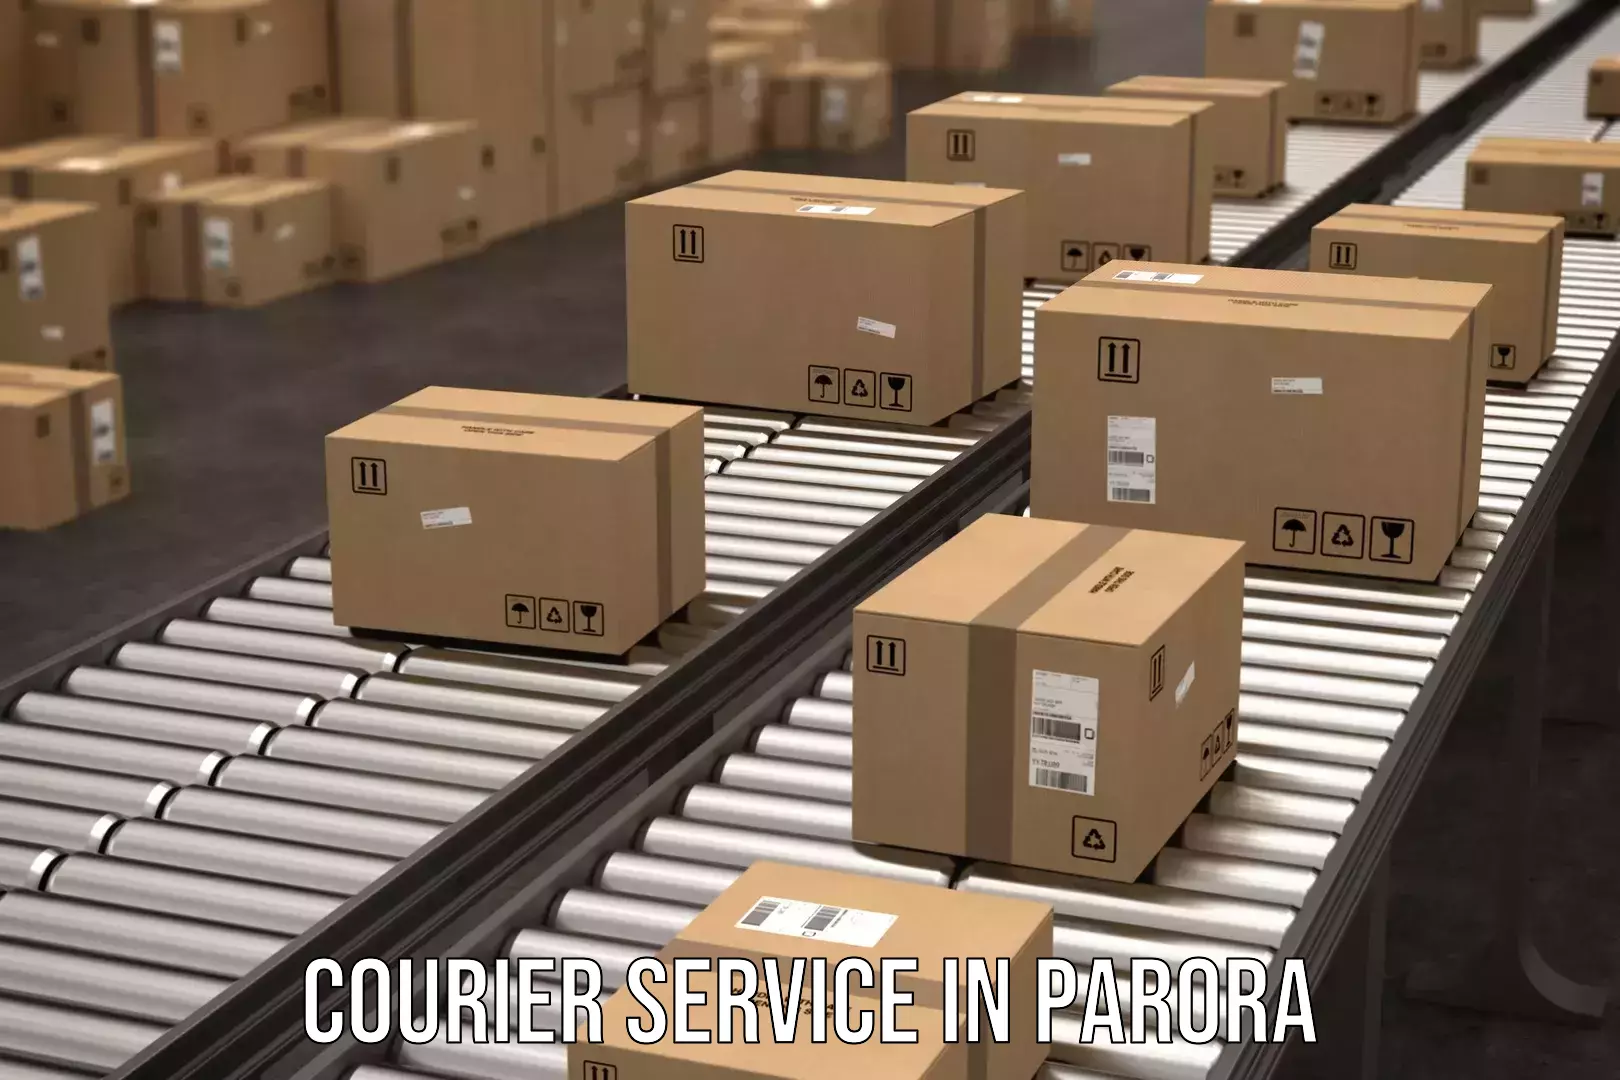 Online package tracking in Parora